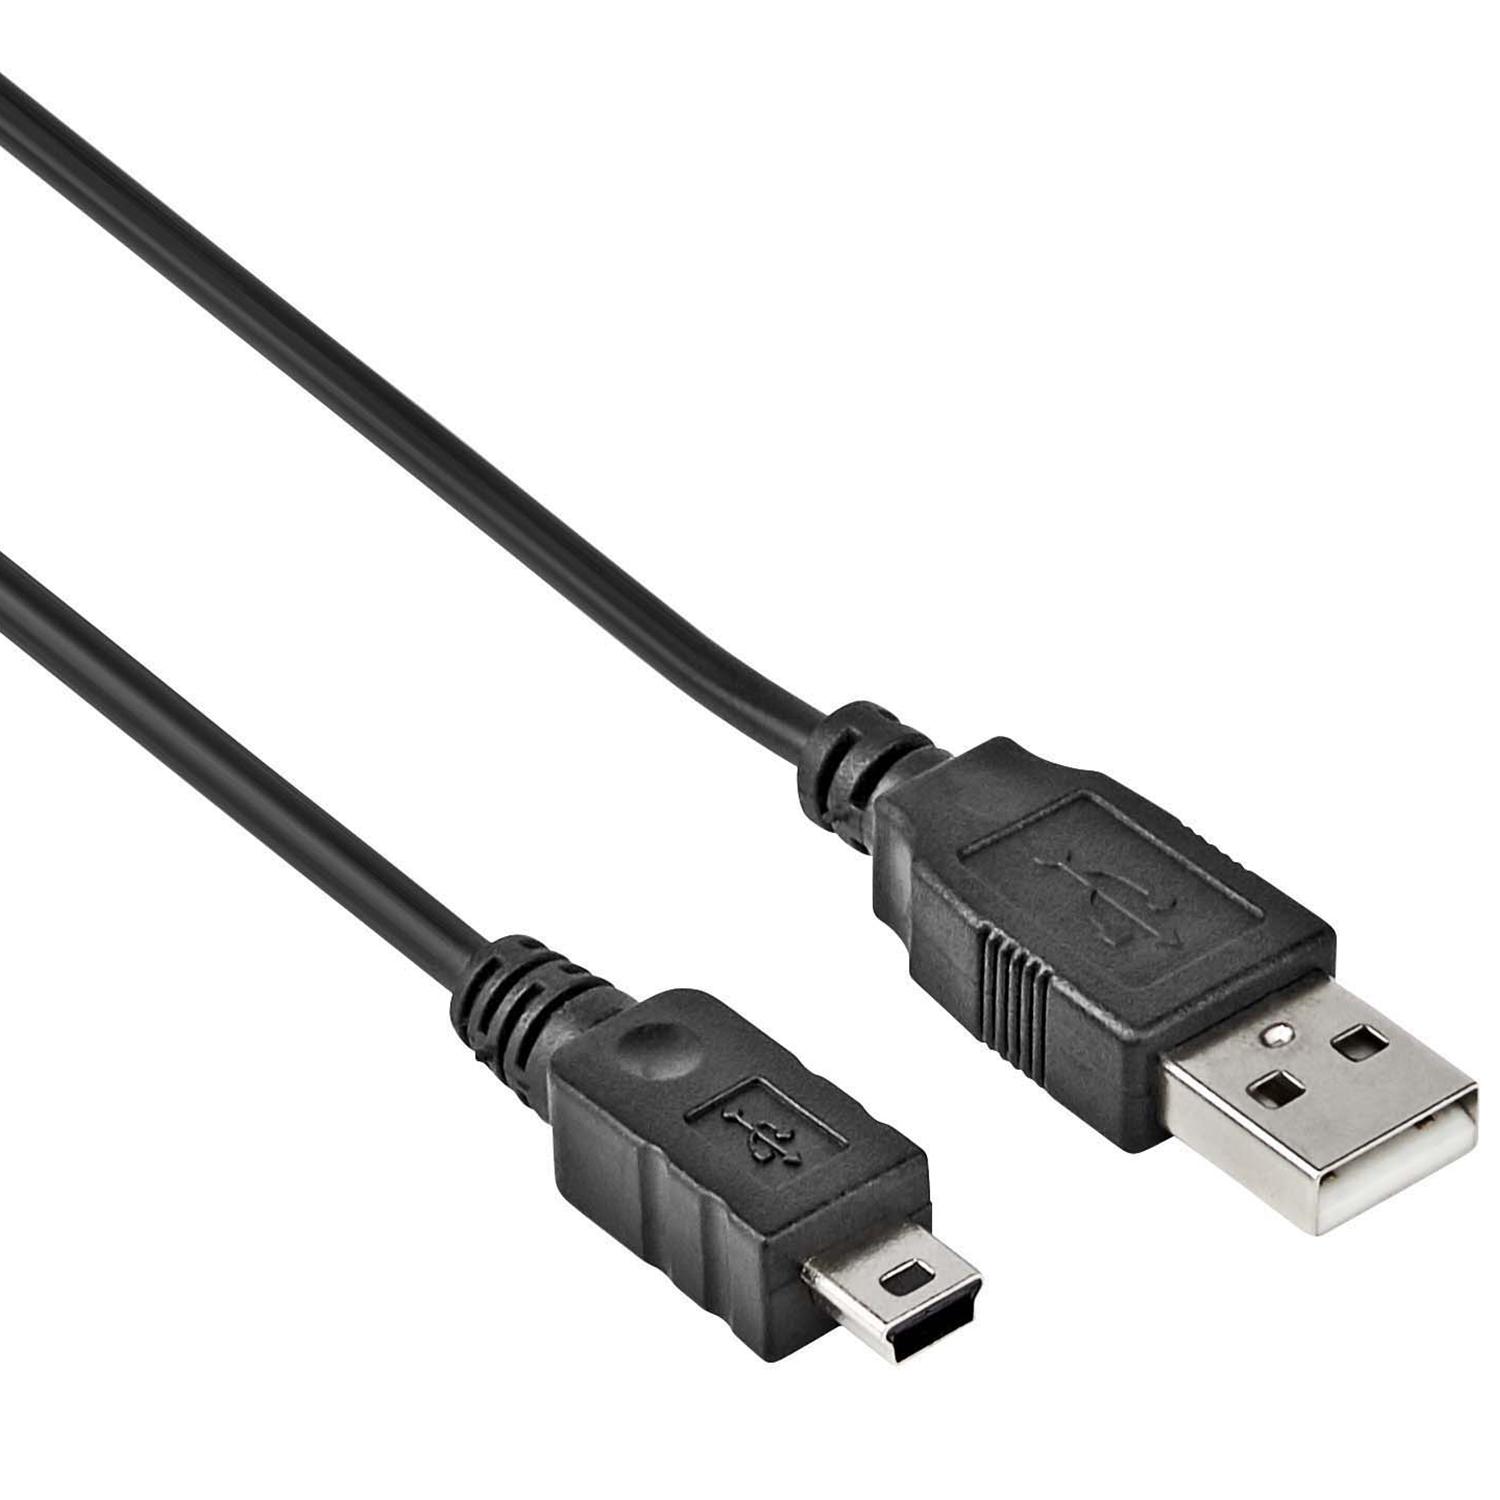 Regelmatig Tranen Scheiding Mini USB 2.0 Kabel - Mini USB 2.0 kabel, Connector 1: USB A male, Connector  2: 5p mini USB B male, 3 meter.